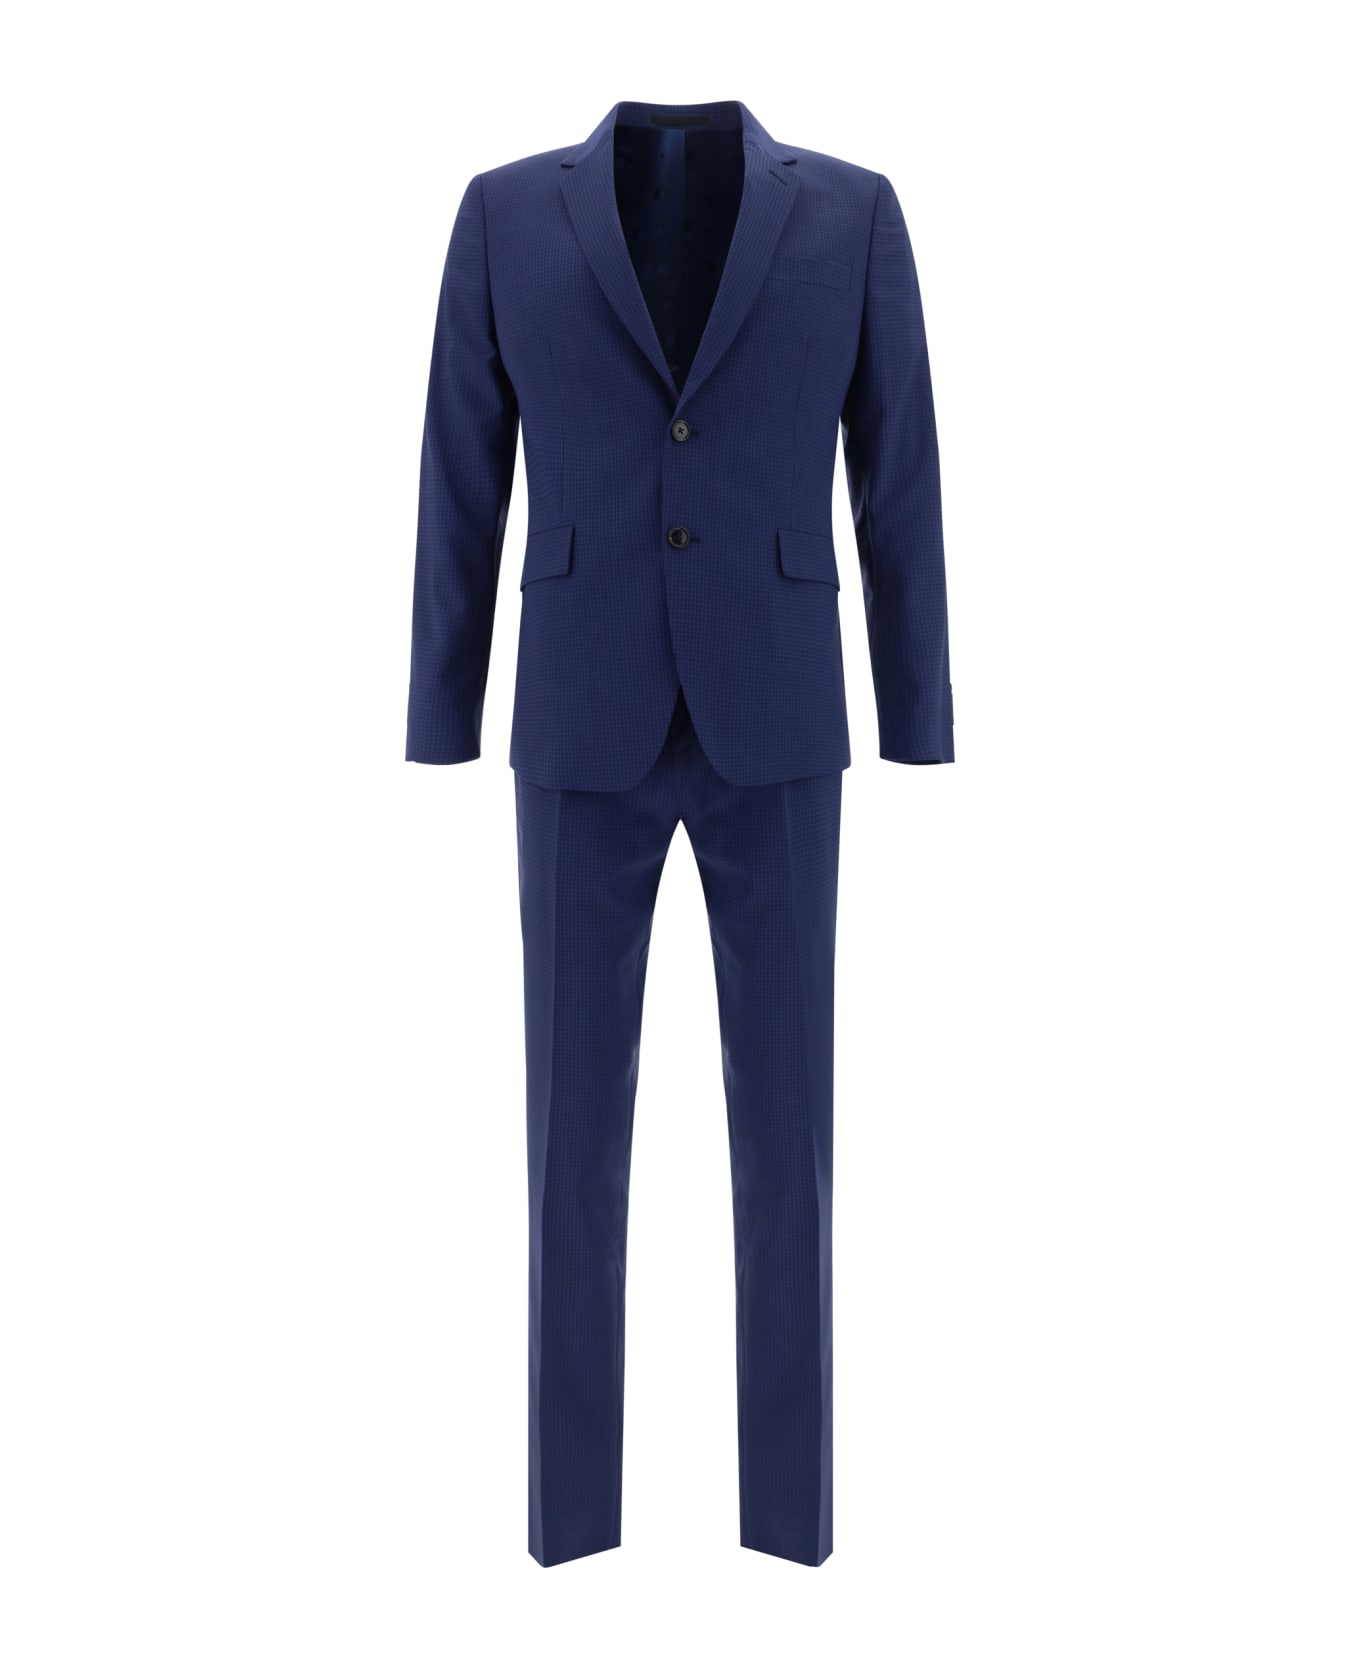 Paul Smith Suit - Blue スーツ